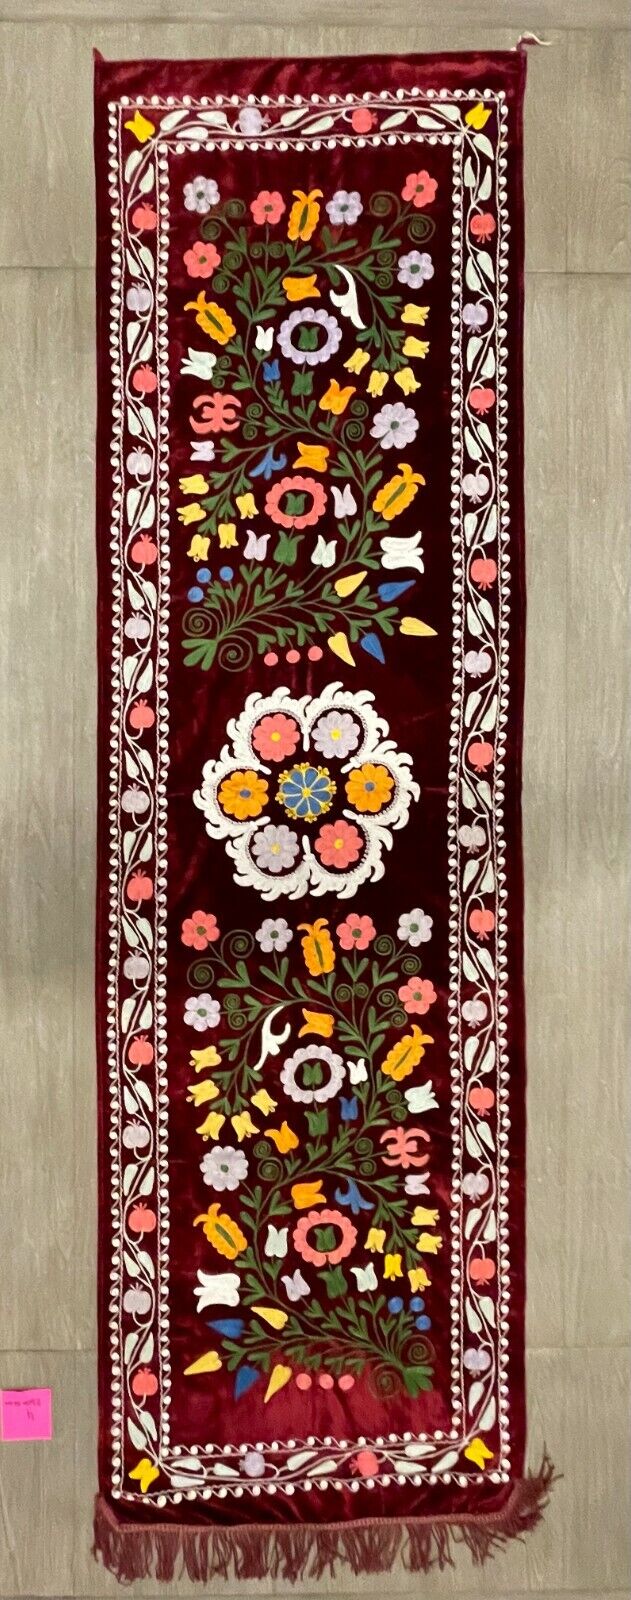  Suzani Wall/Furniture Decor. Vintage Uzbek Handmade Embroidery 90x26in.